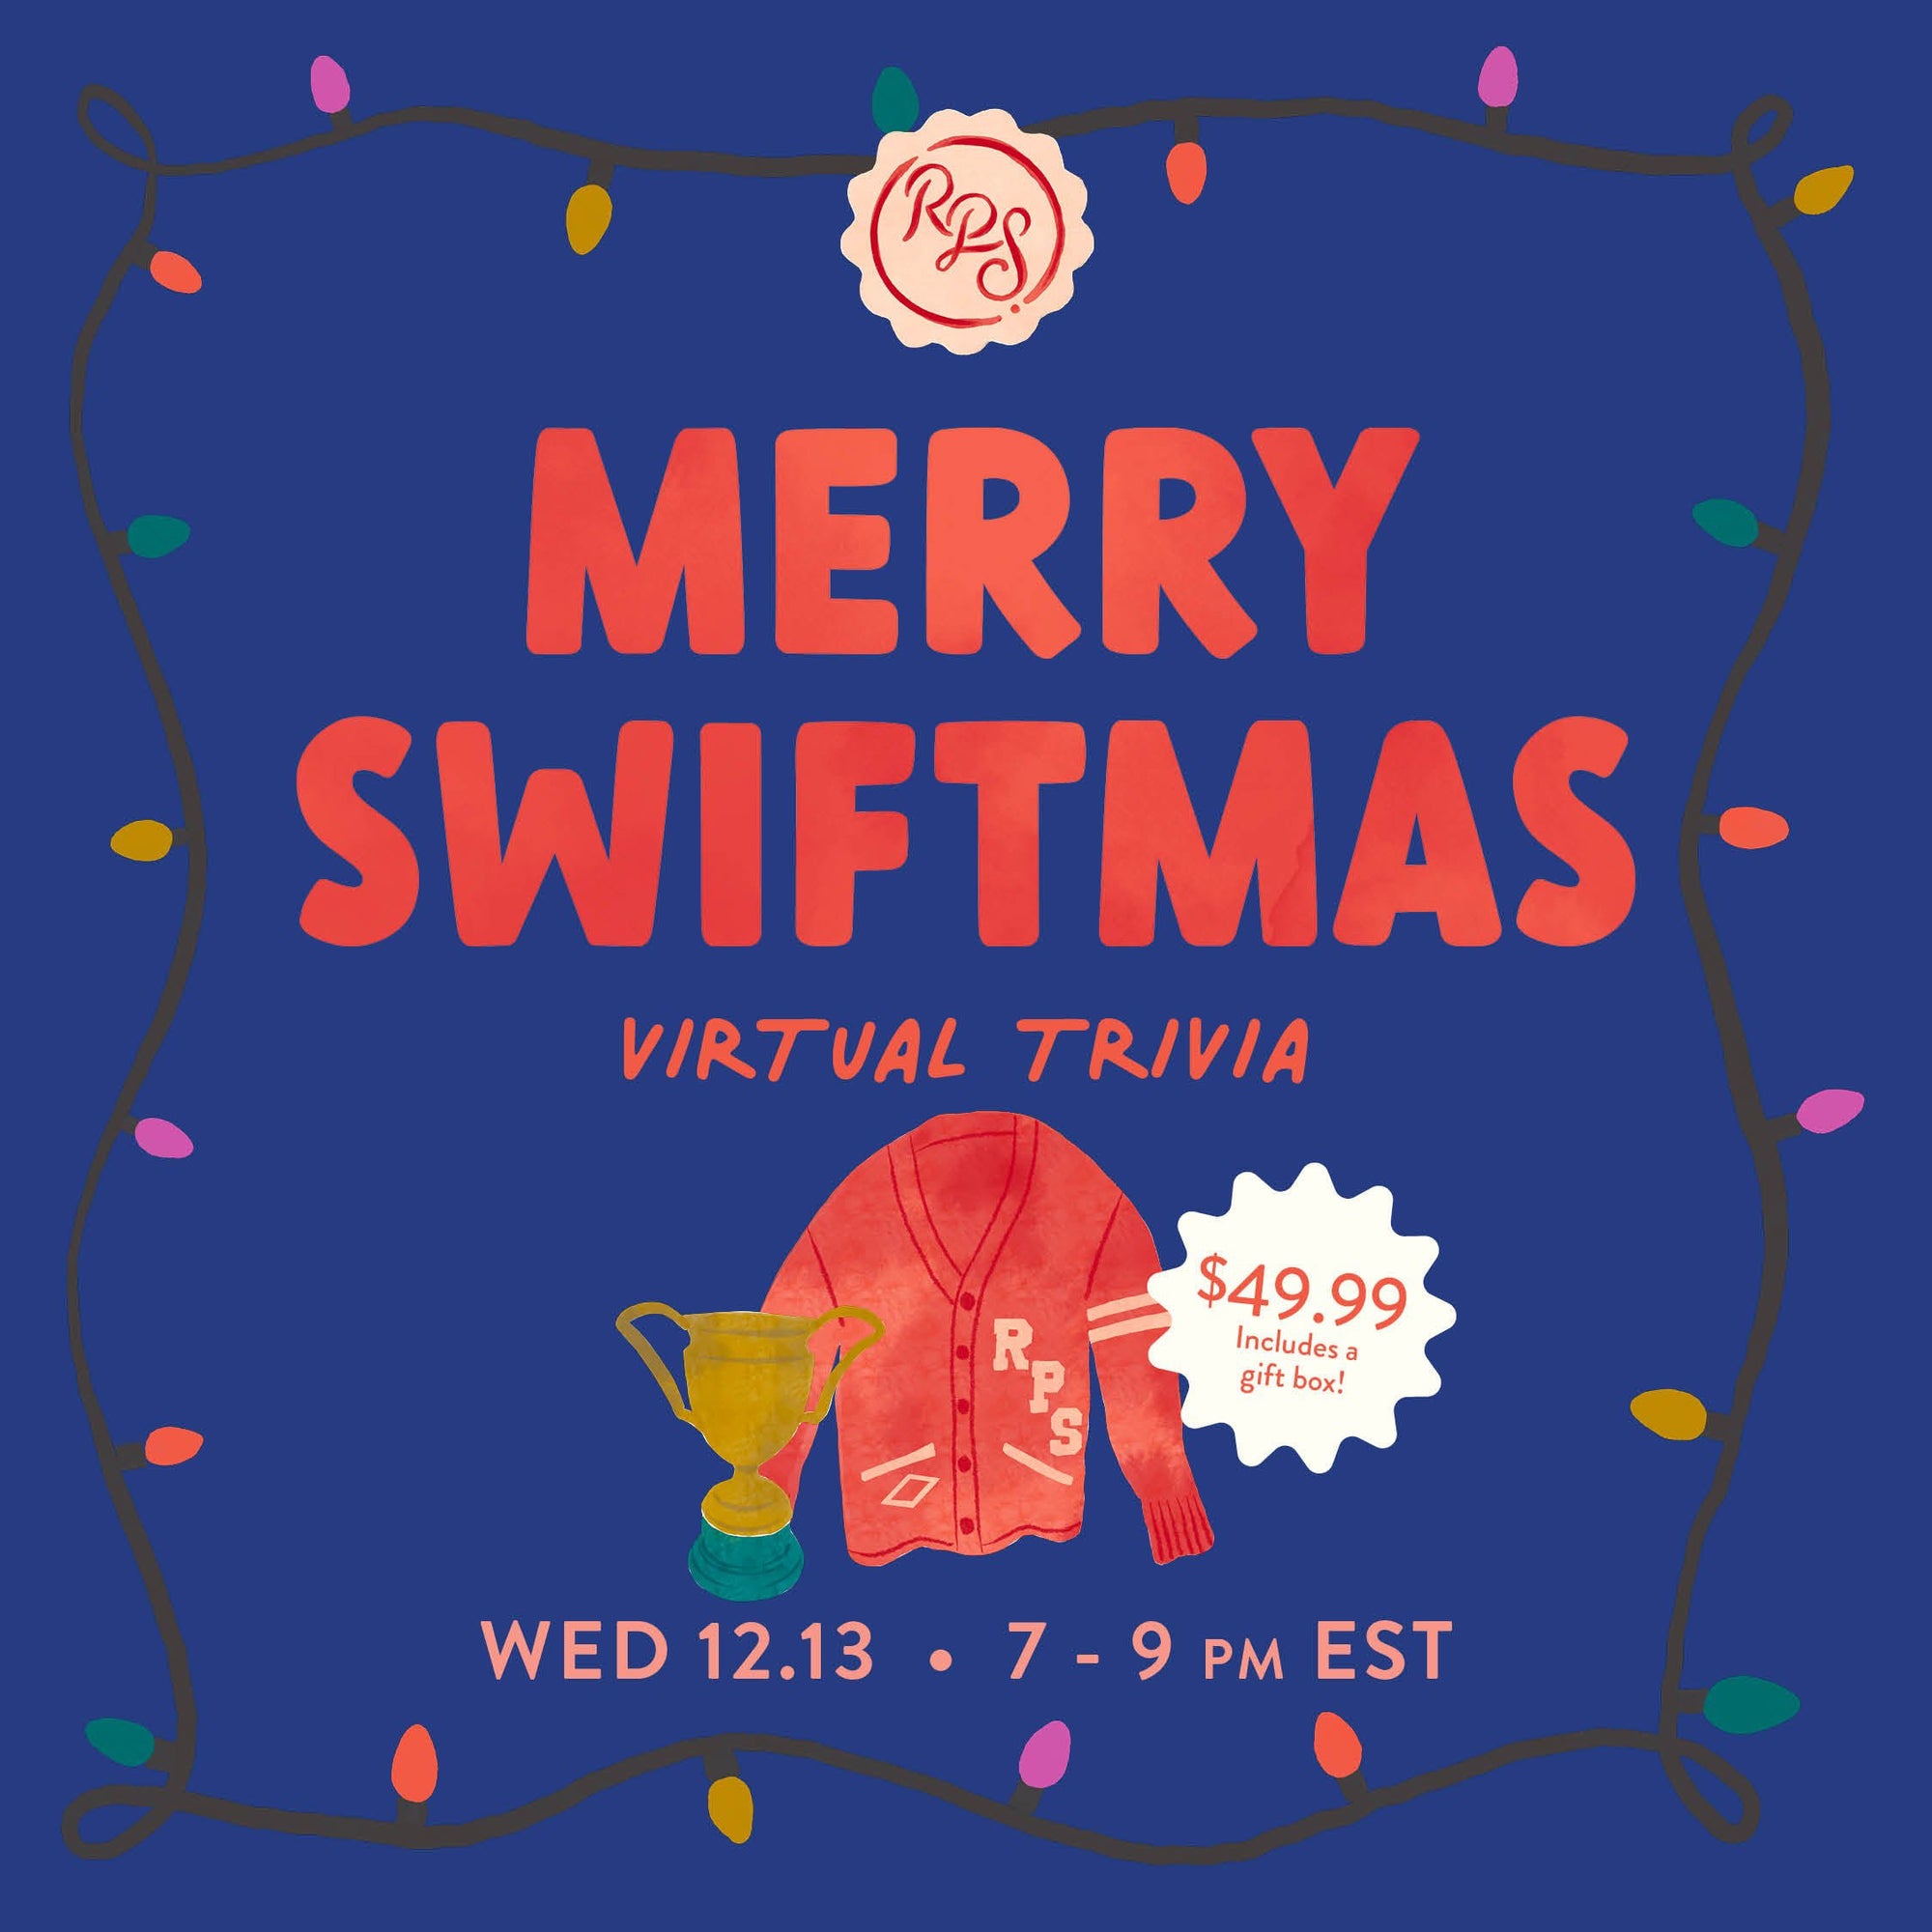 Merry Swiftmas Taylor Themed Virtual Trivia & Gift Box